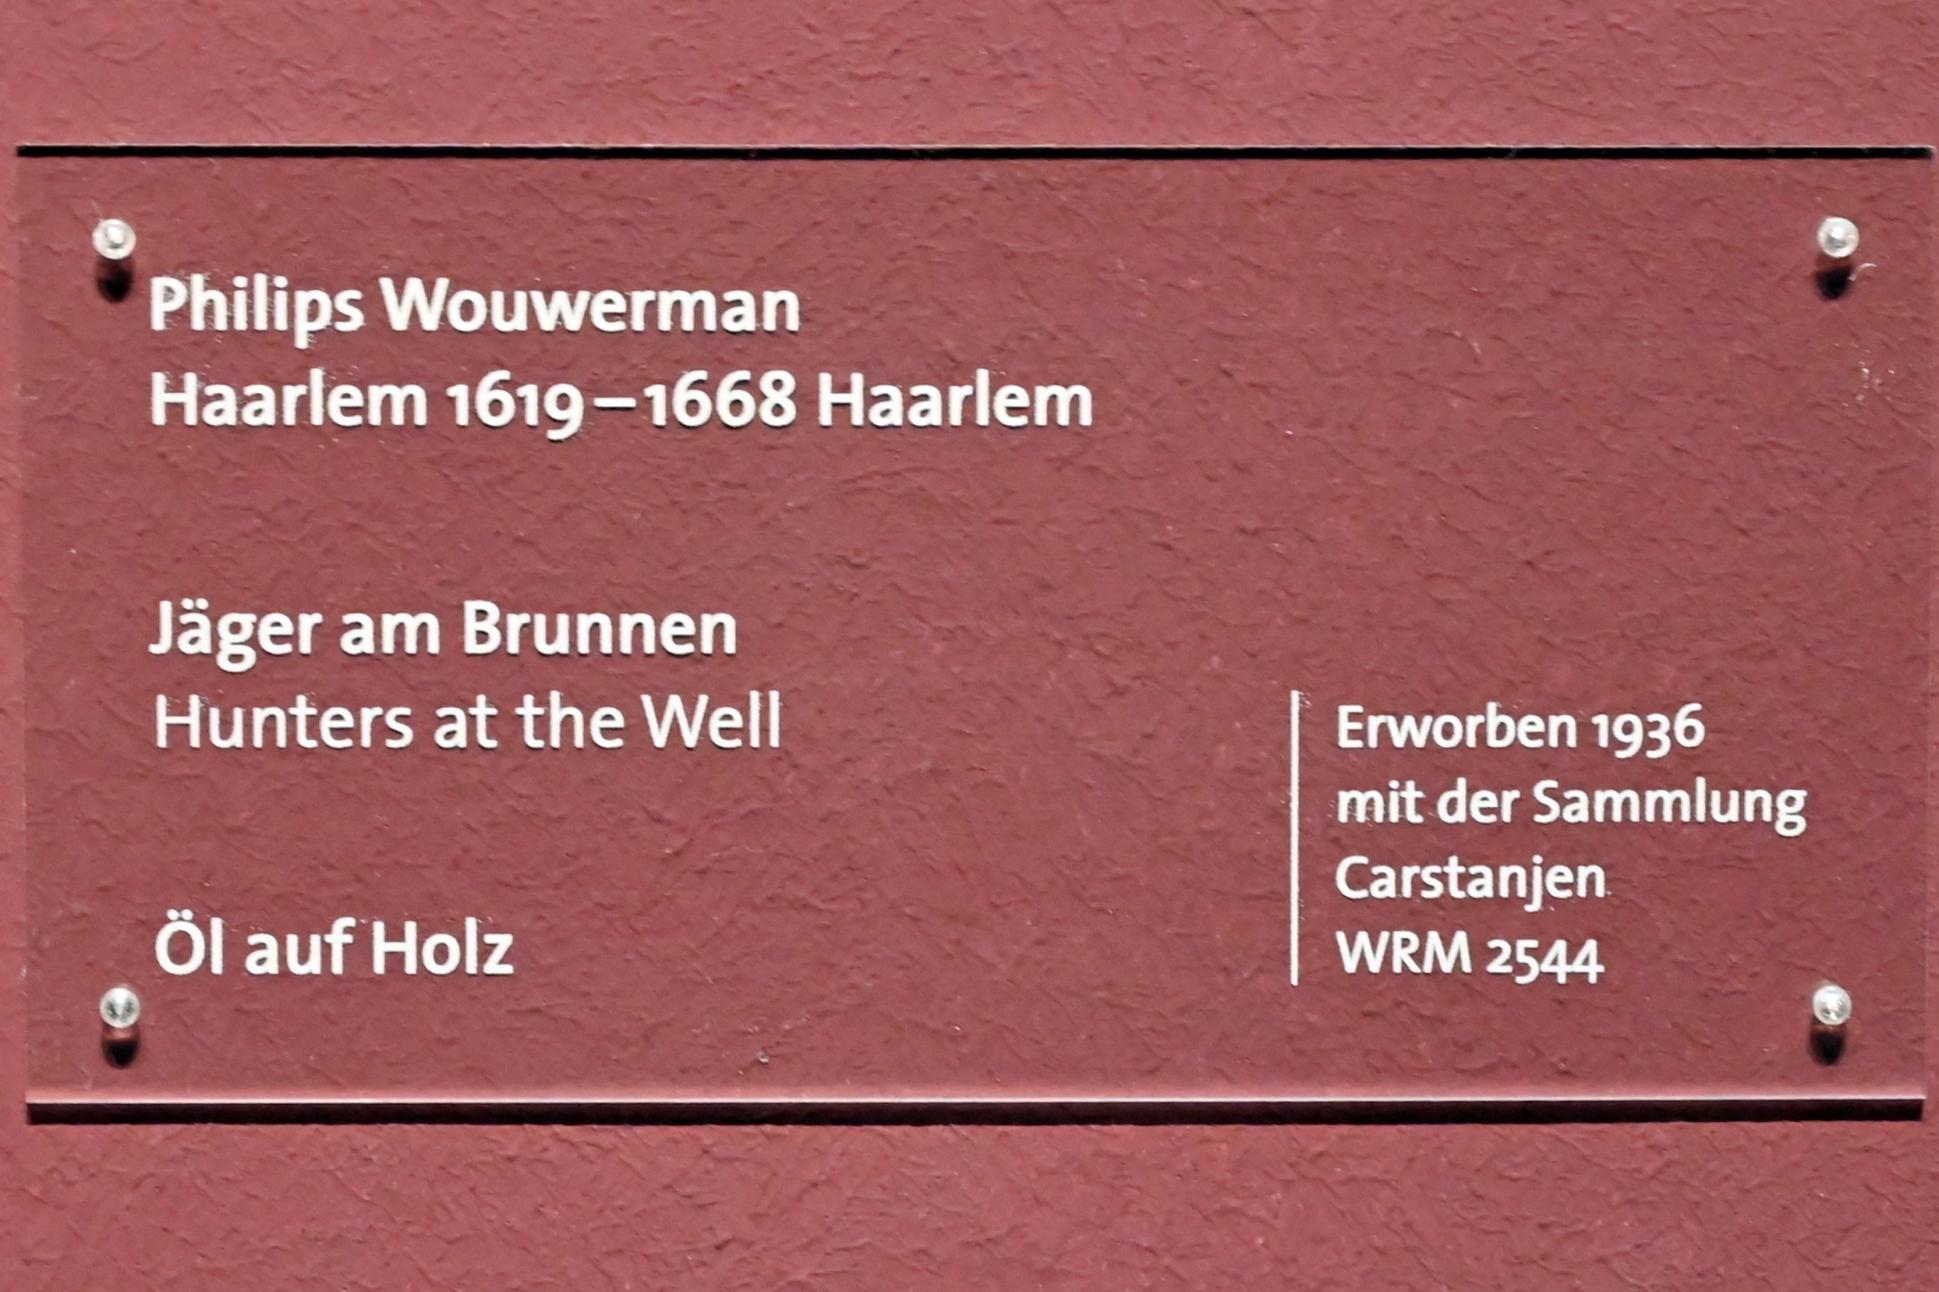 Philips Wouwerman (1645–1665), Jäger am Brunnen, Köln, Wallraf-Richartz-Museum, Barock - Saal 8, Undatiert, Bild 2/2